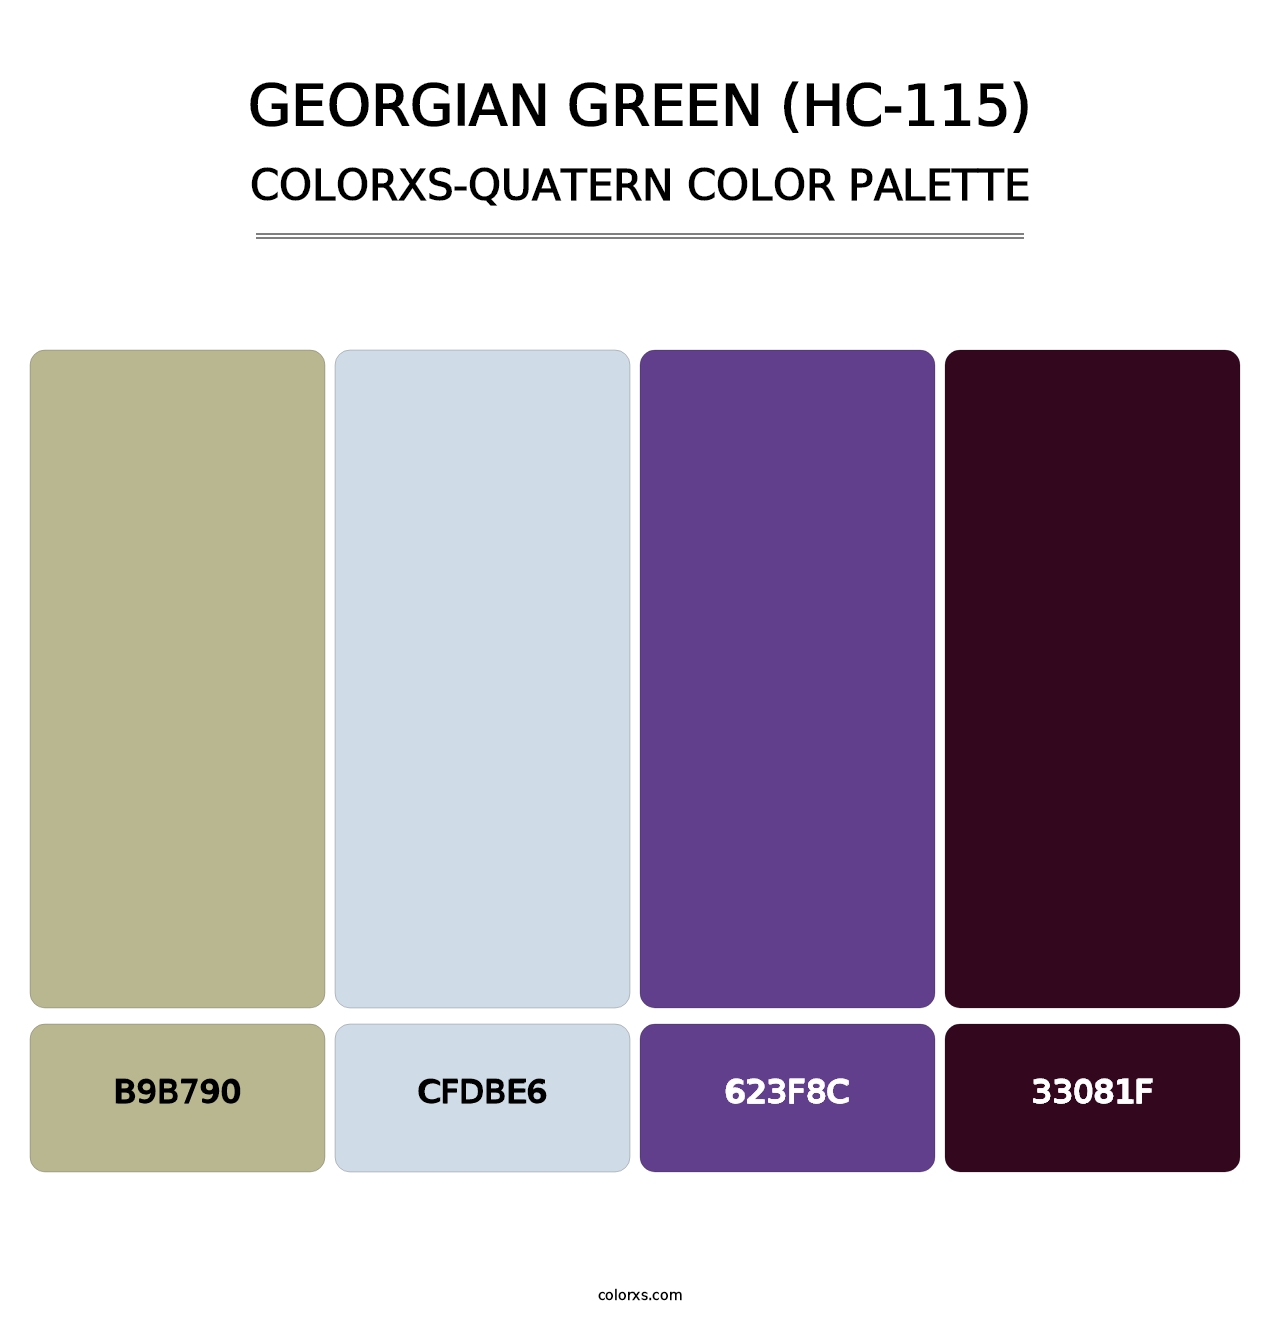 Georgian Green (HC-115) - Colorxs Quatern Palette